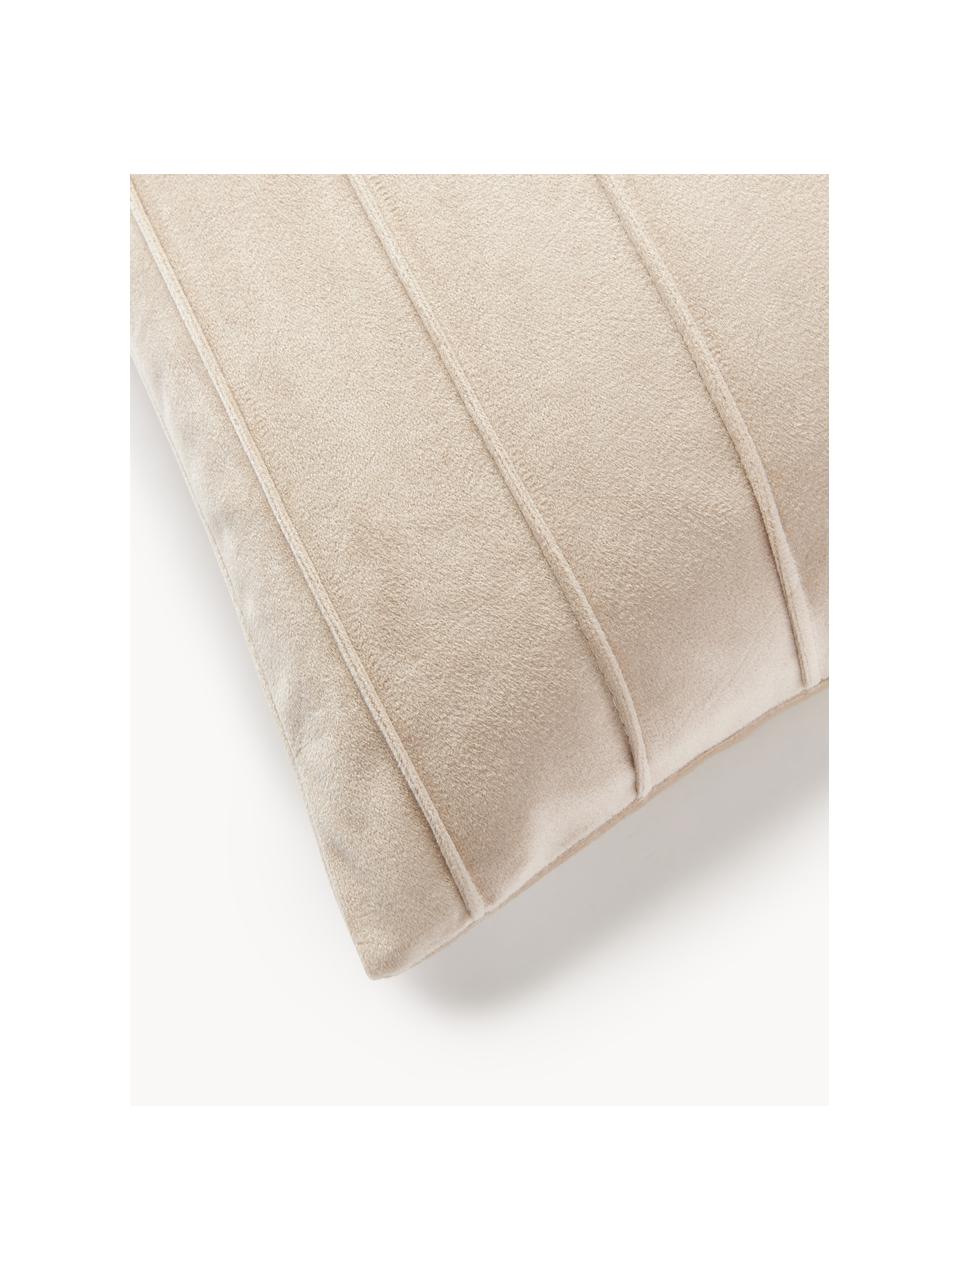 Fluwelen kussenhoes Lola met structuurpatroon, Fluweel (100% polyester), Beige, B 40 x L 40 cm